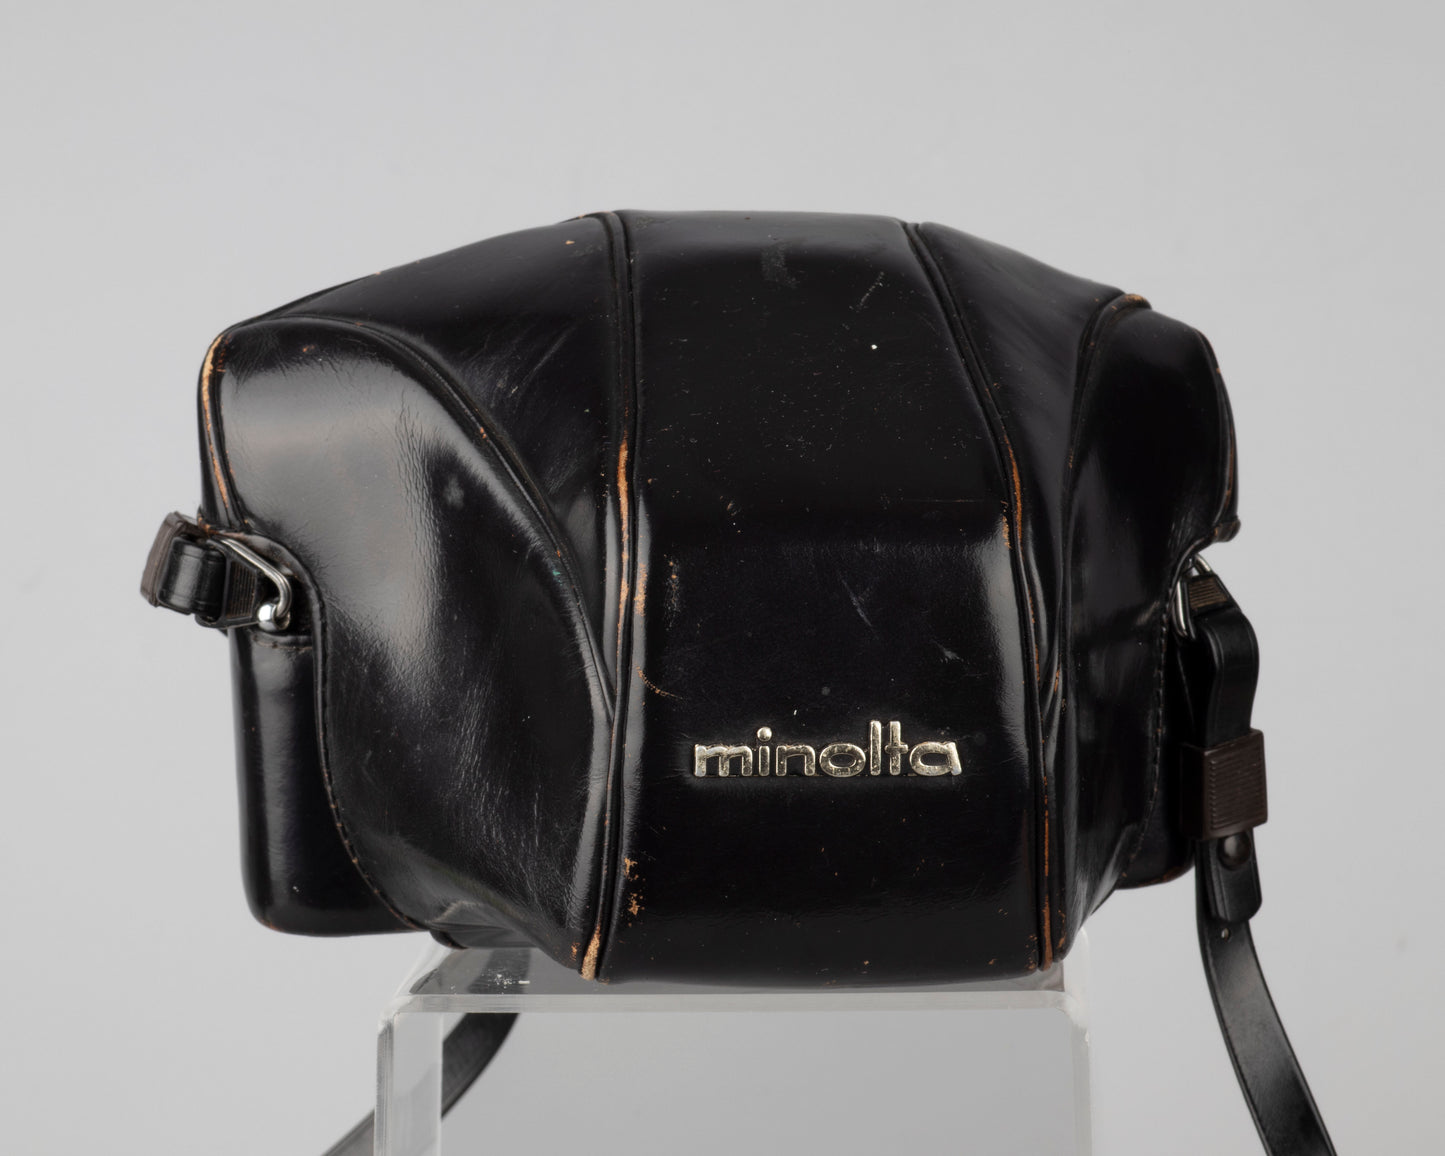 Minolta SRT 101 SLR 35 mm avec objectif MC Rokkor PF 55 mm f1.7 + étui toujours prêt (série 2496174)